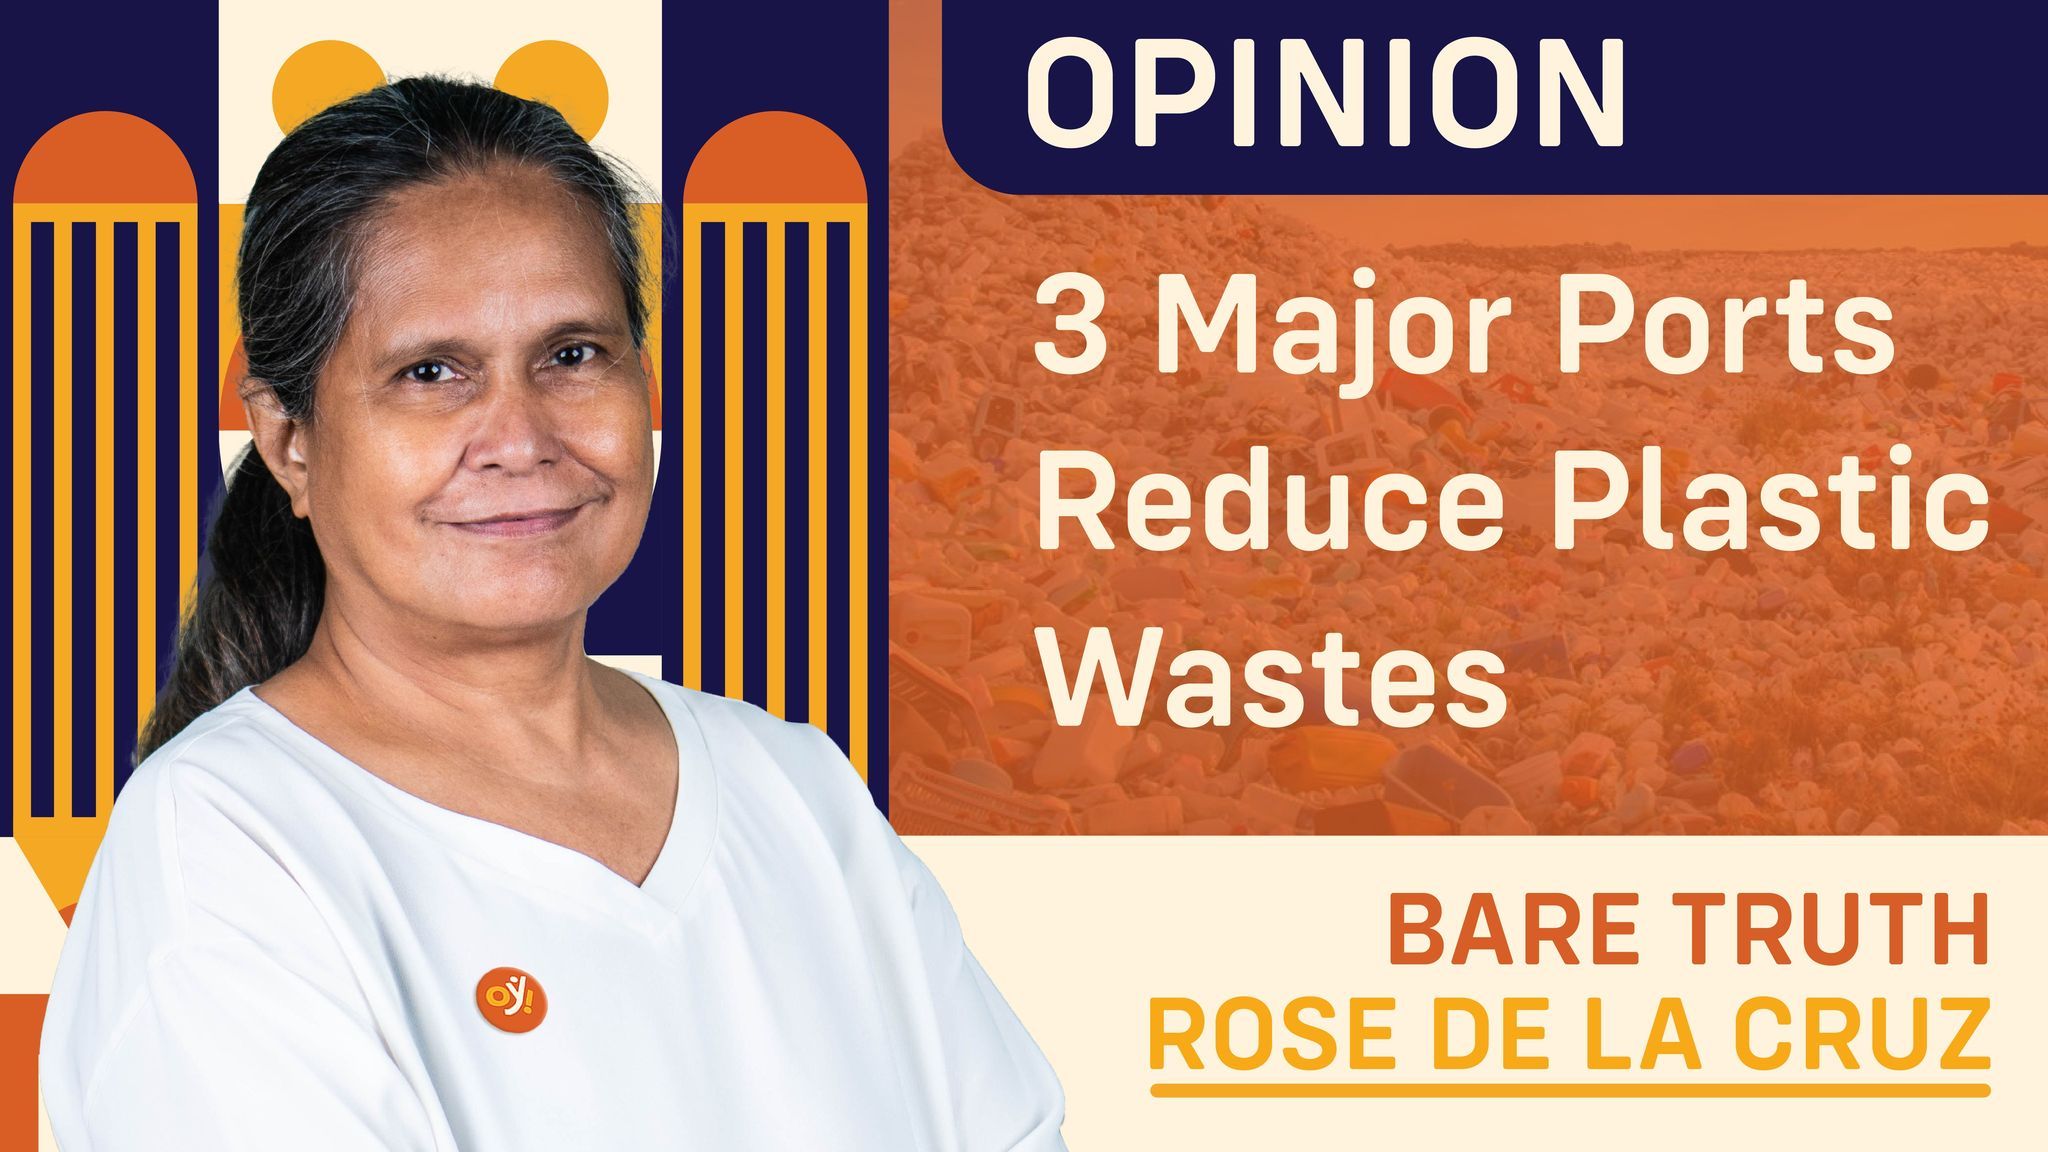 3 Major Ports Reduce Plastic Wastes